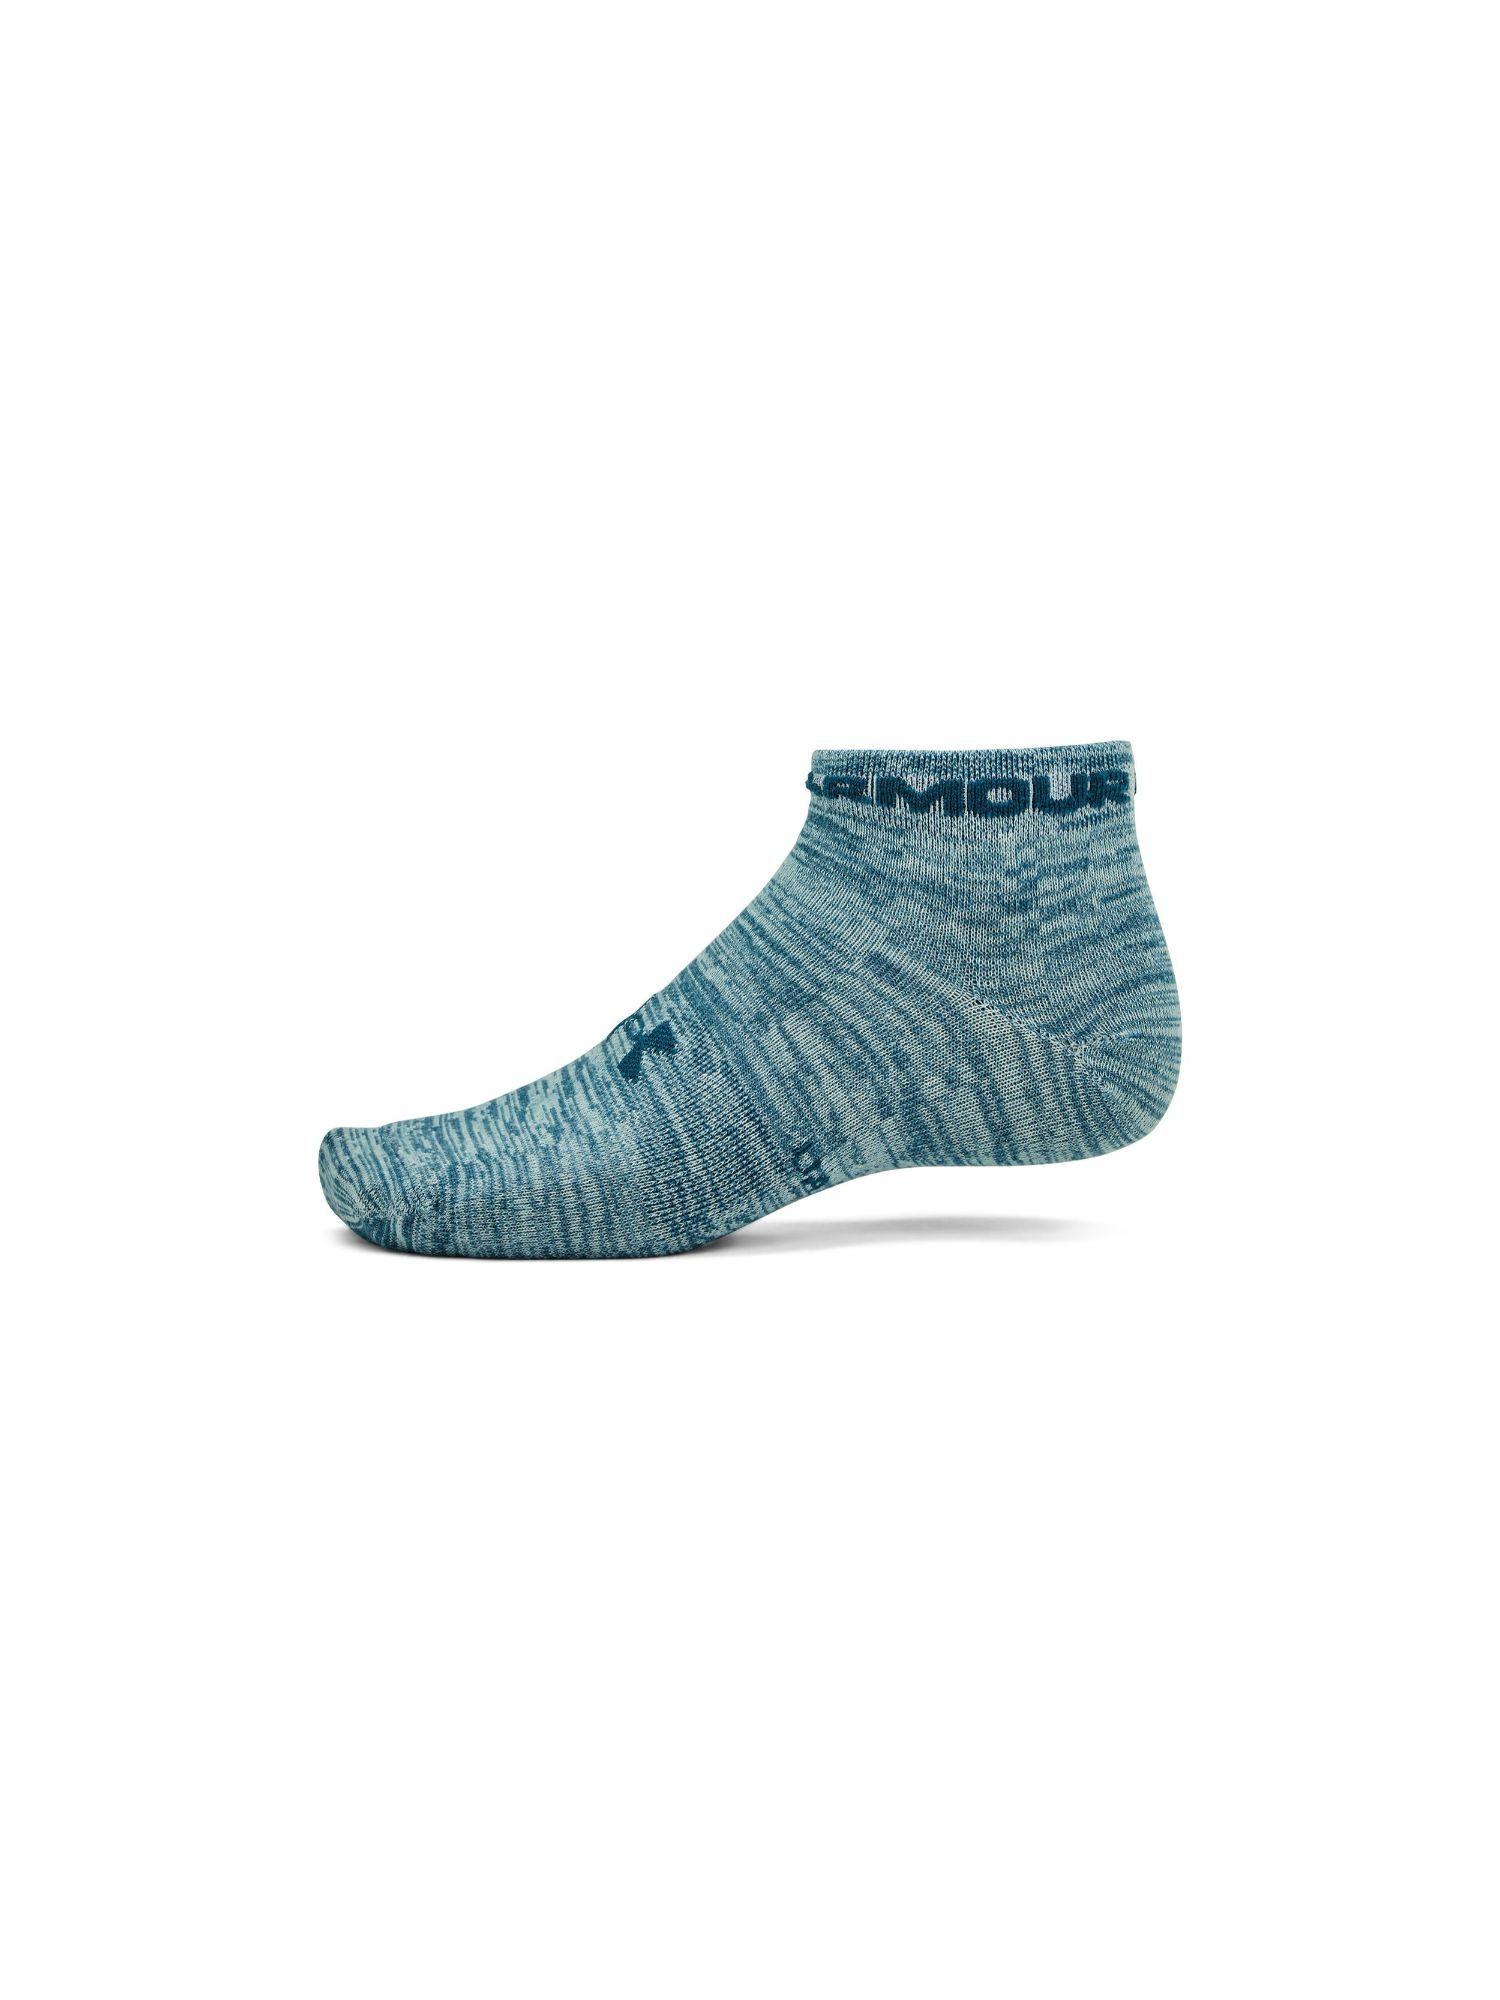 unisex essential low cut socks - blue (pack of 3)